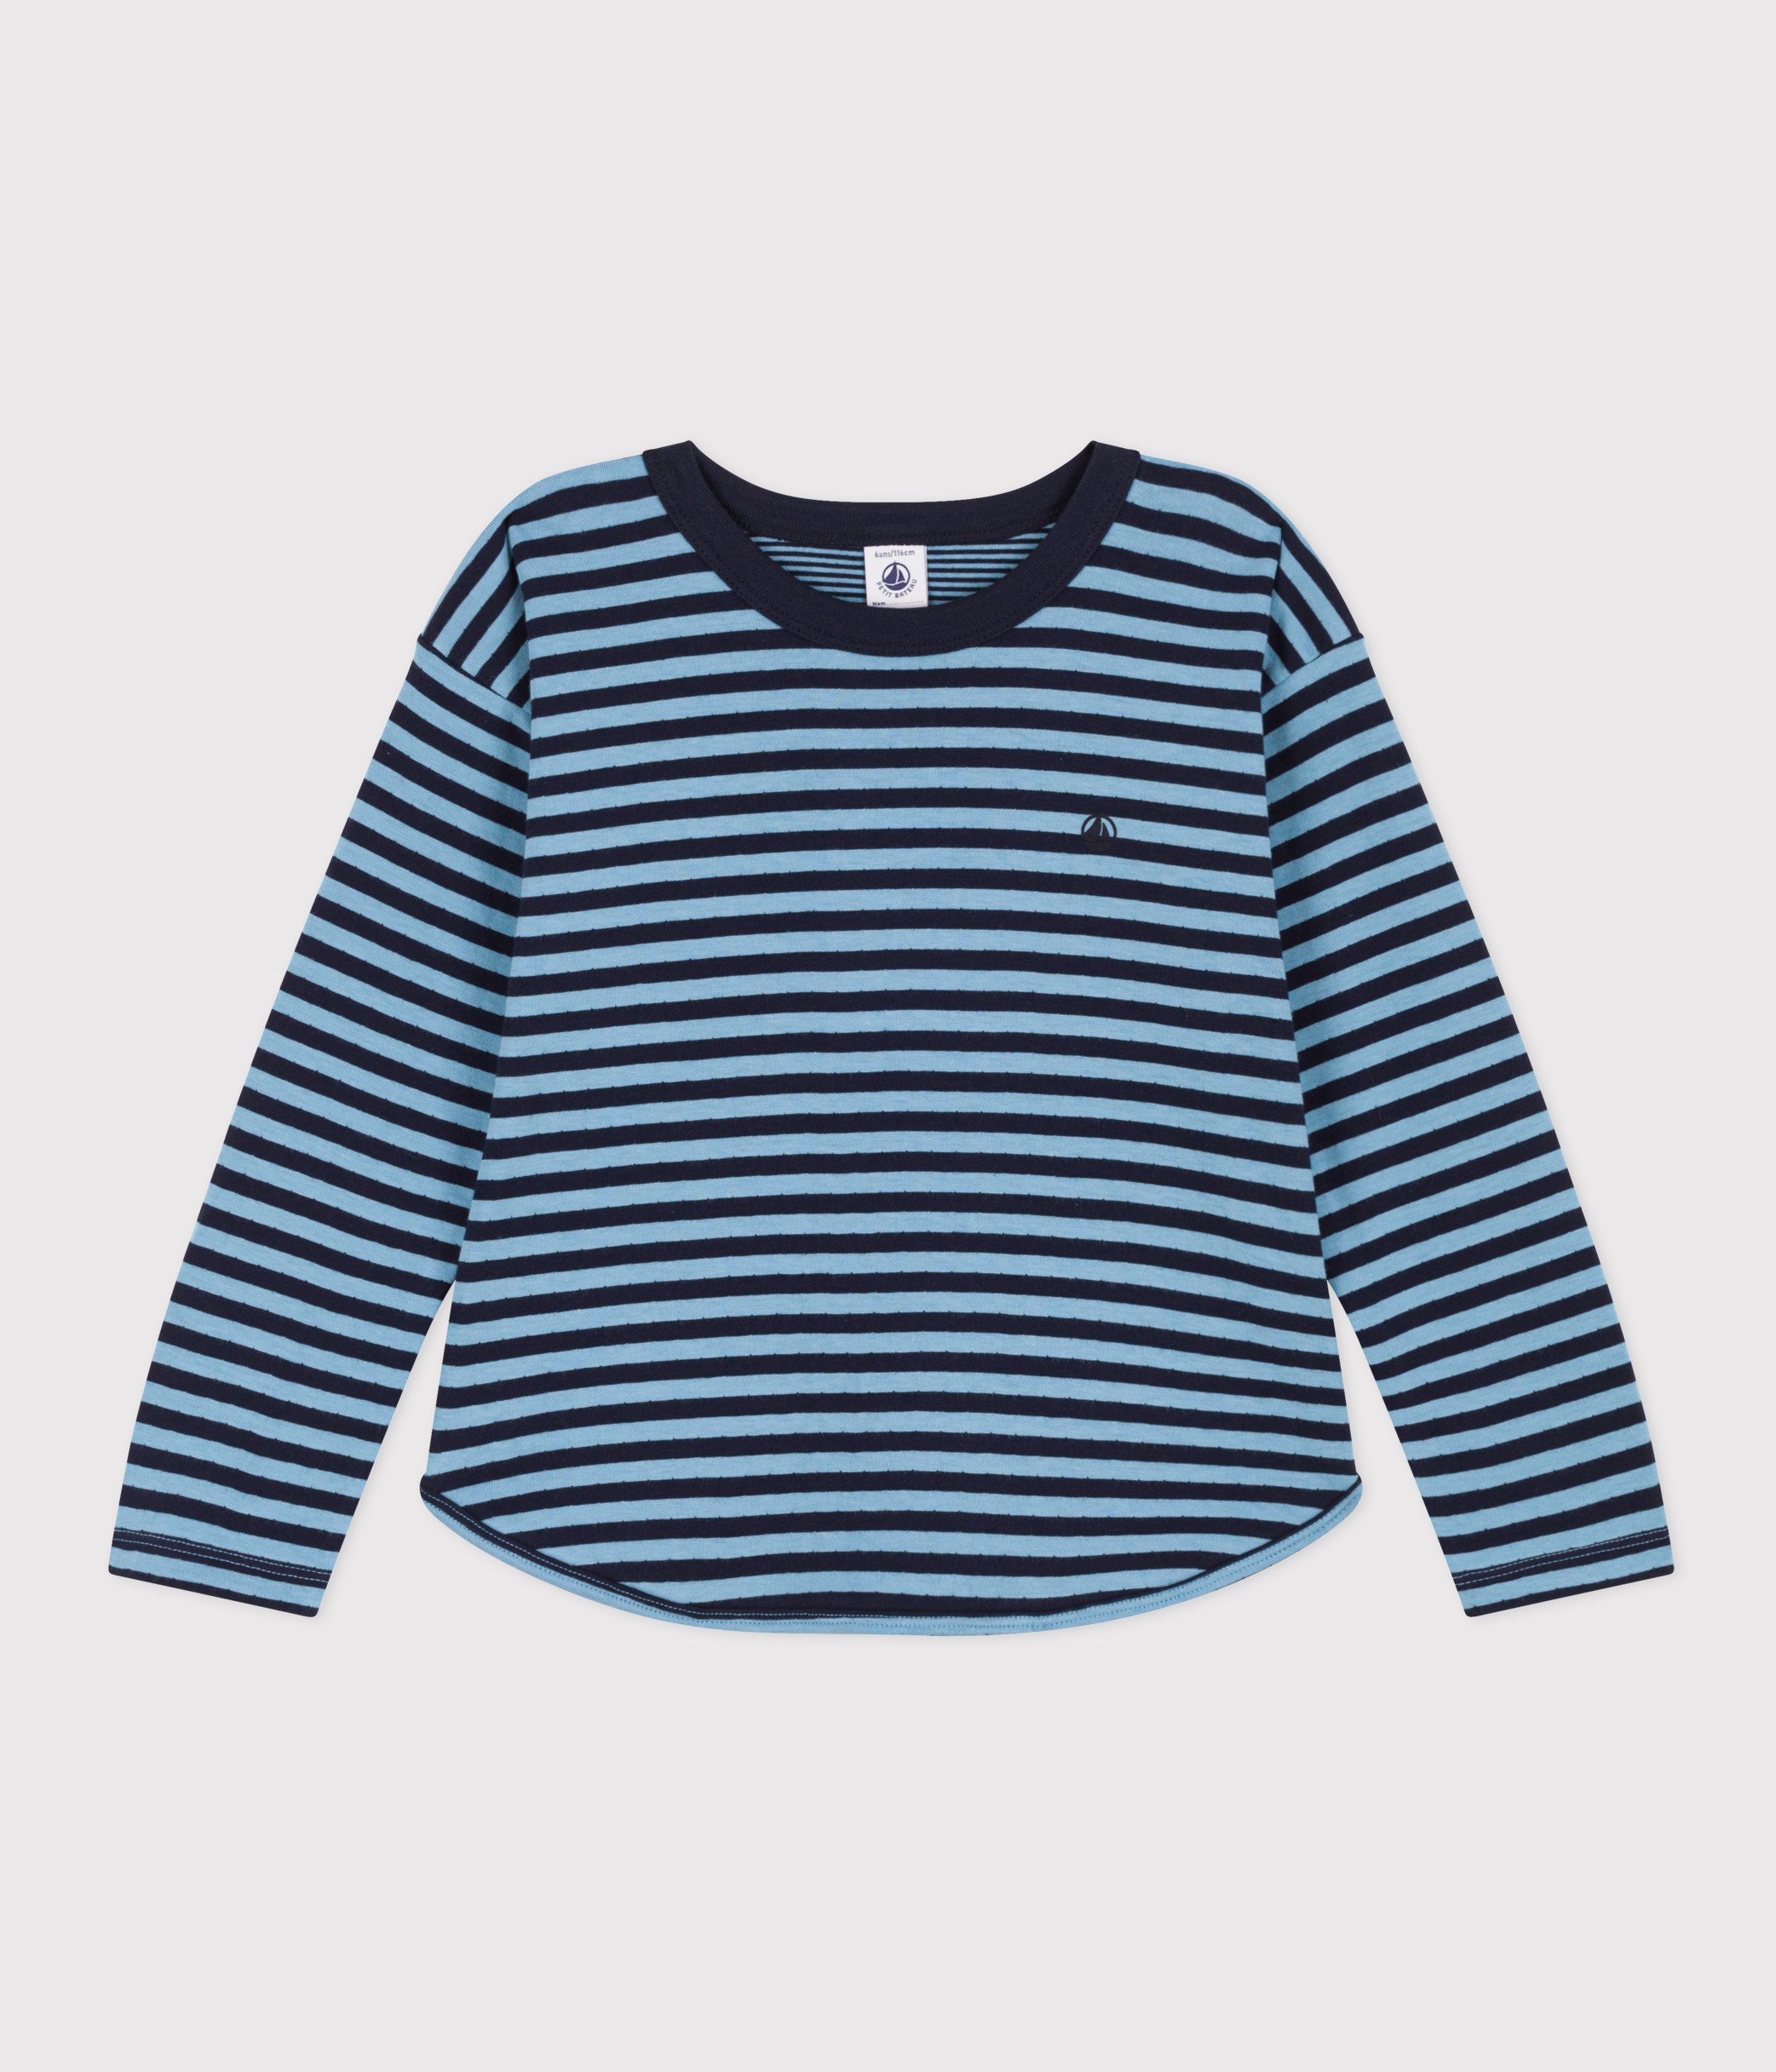 Langärmeliges T-Shirt aus Doppeljersey für Kinder/Jungen SMOKING/AZUL |  Petit Bateau